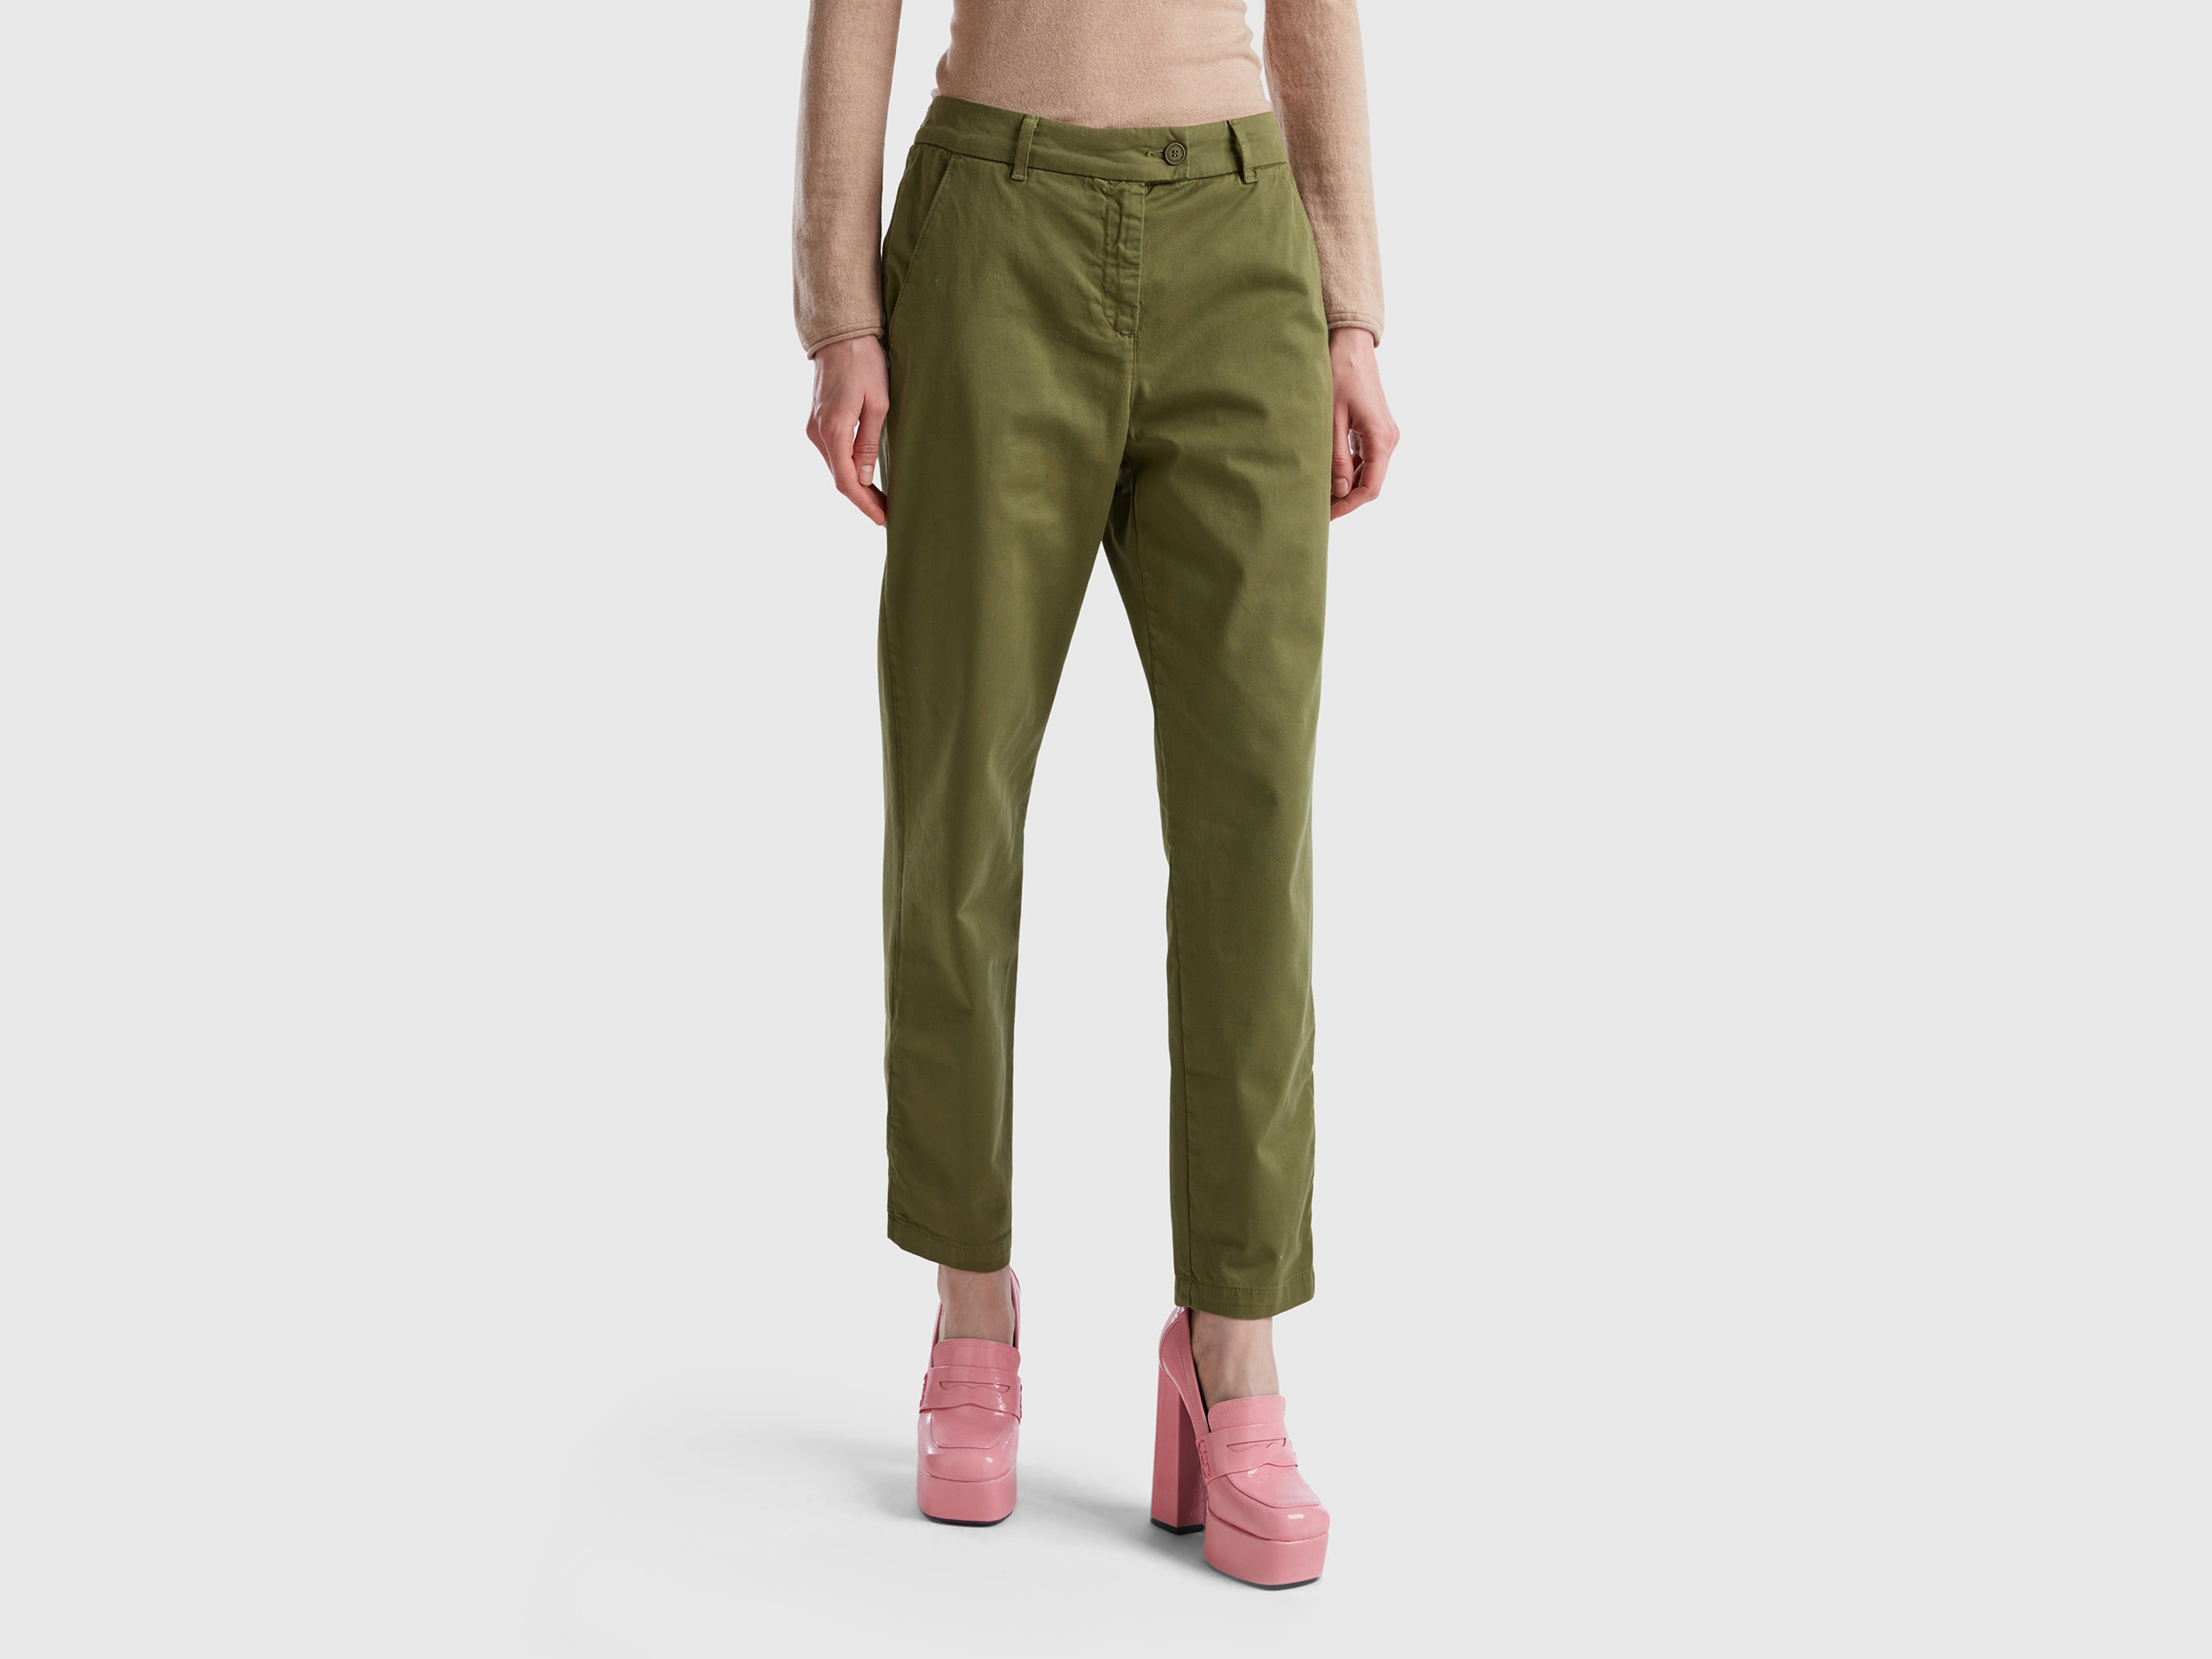 Benetton, Stretch Cotton Chino Trousers, size 6, Military Green, Women